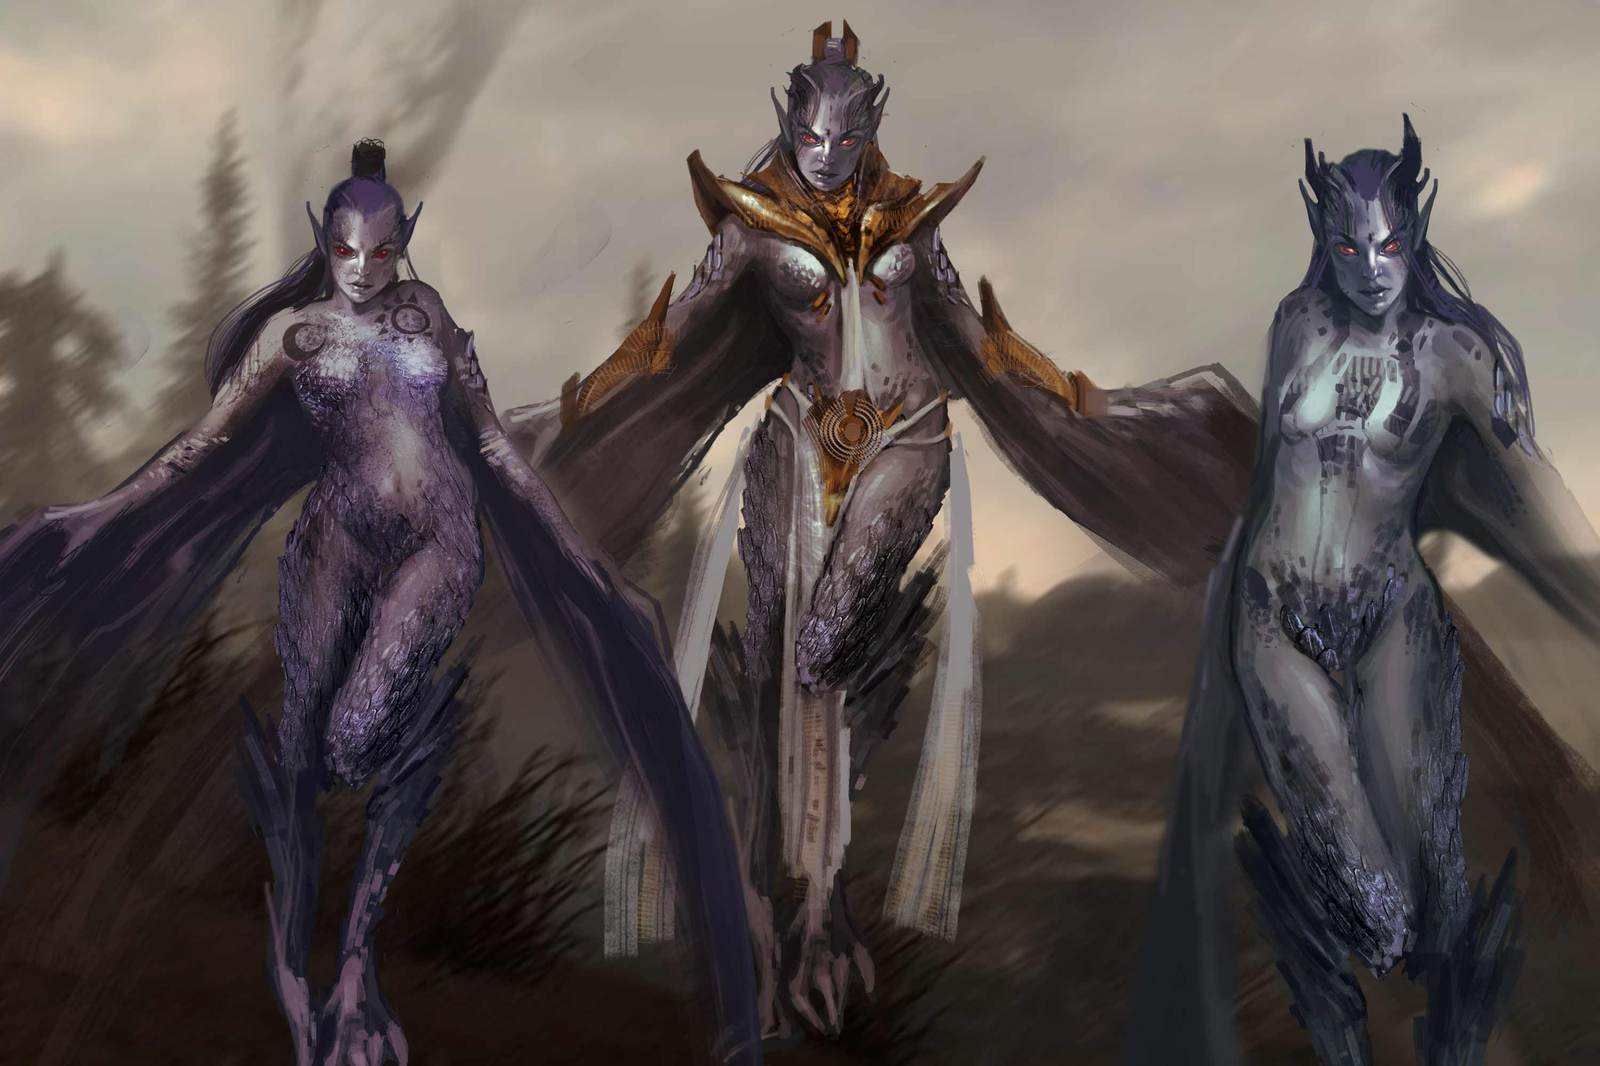 Concept art for Skywind by SombraSister - The elder scrolls, The Elder Scrolls III: Morrowind, Skywind, Art, Deviantart